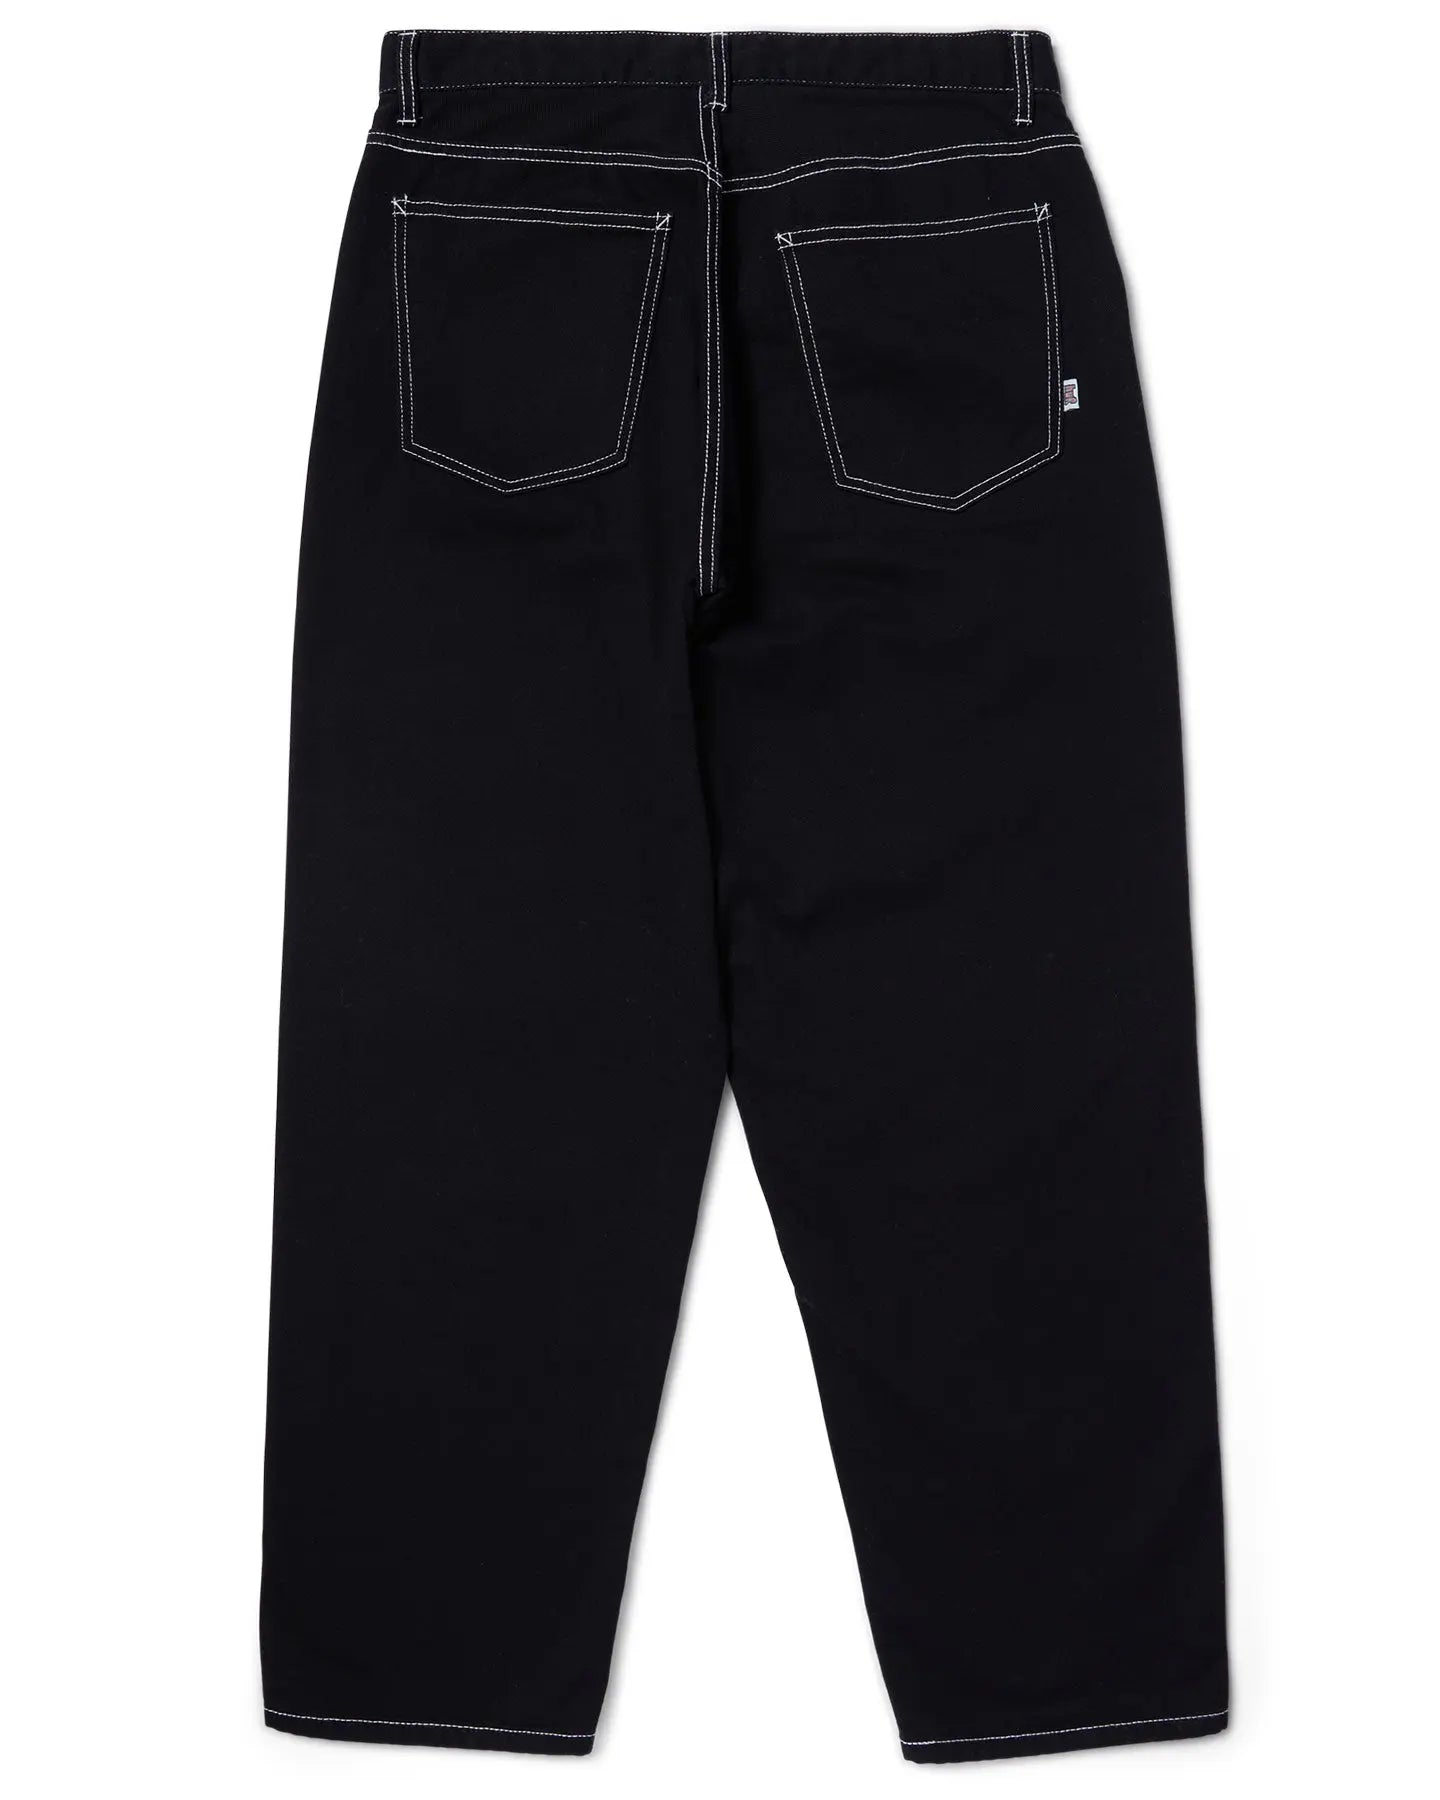 HUF Cromer Pant - Black / White Pants